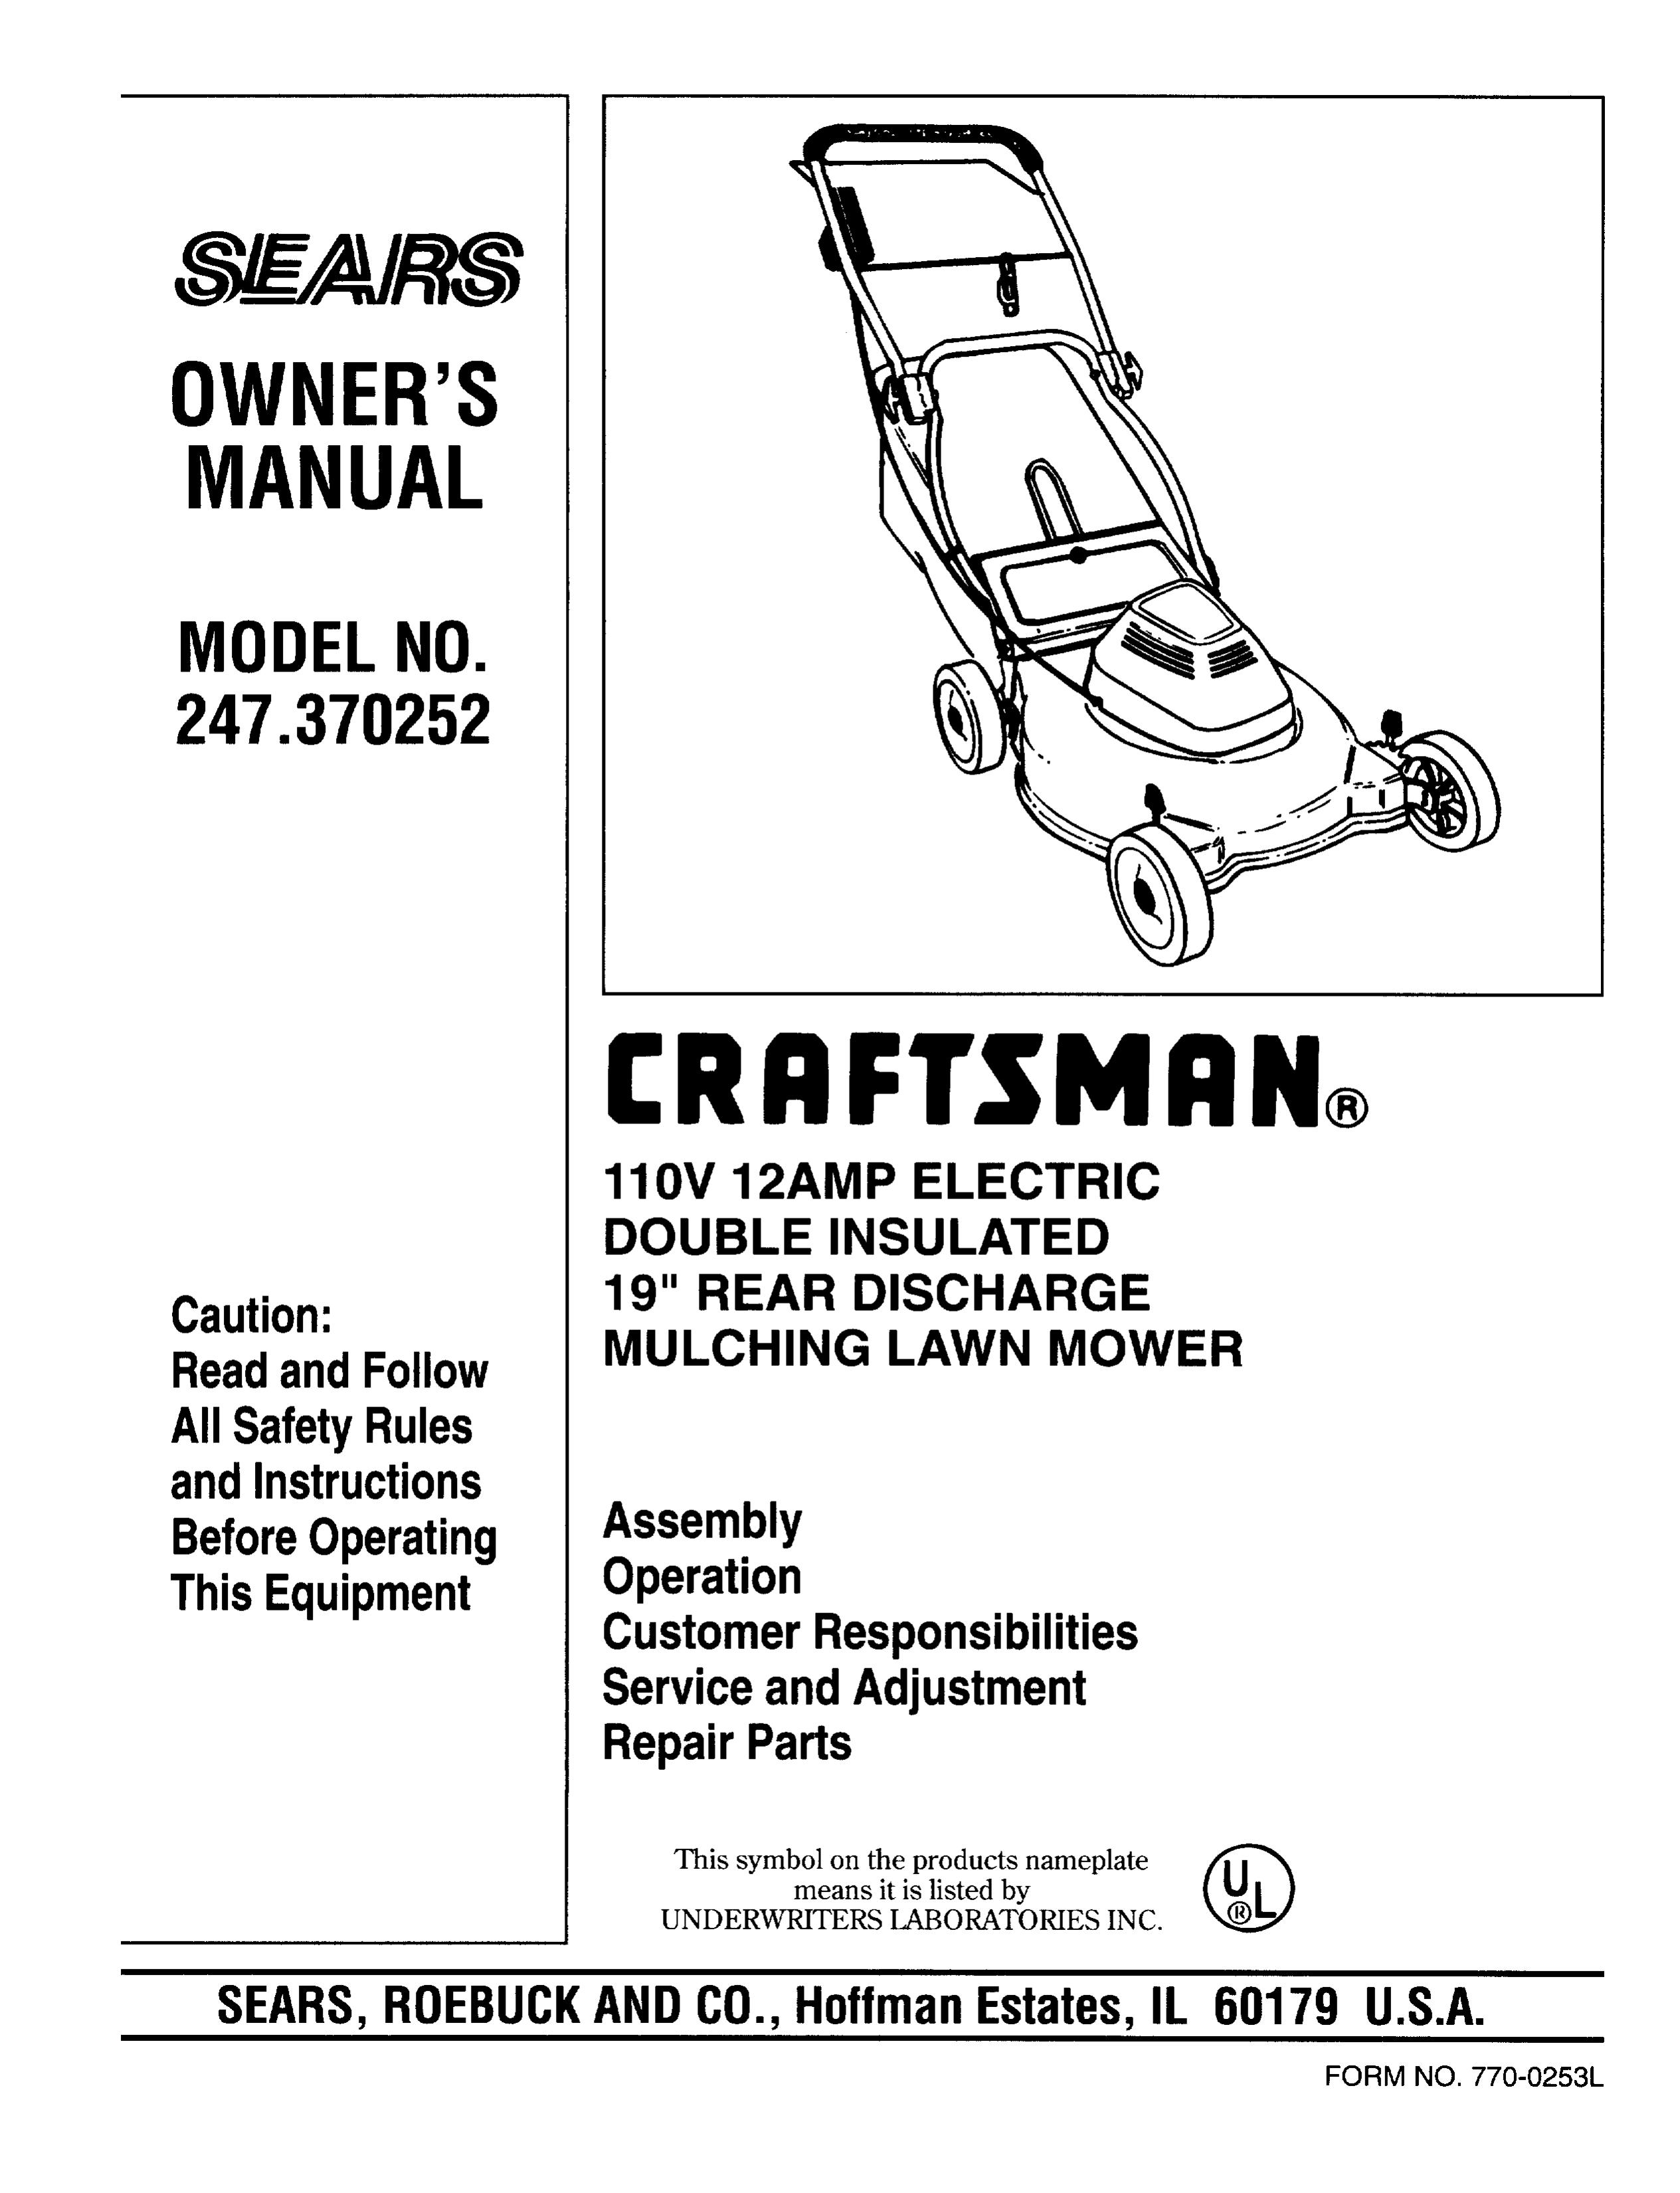 Craftsman 247.370252 Lawn Mower User Manual